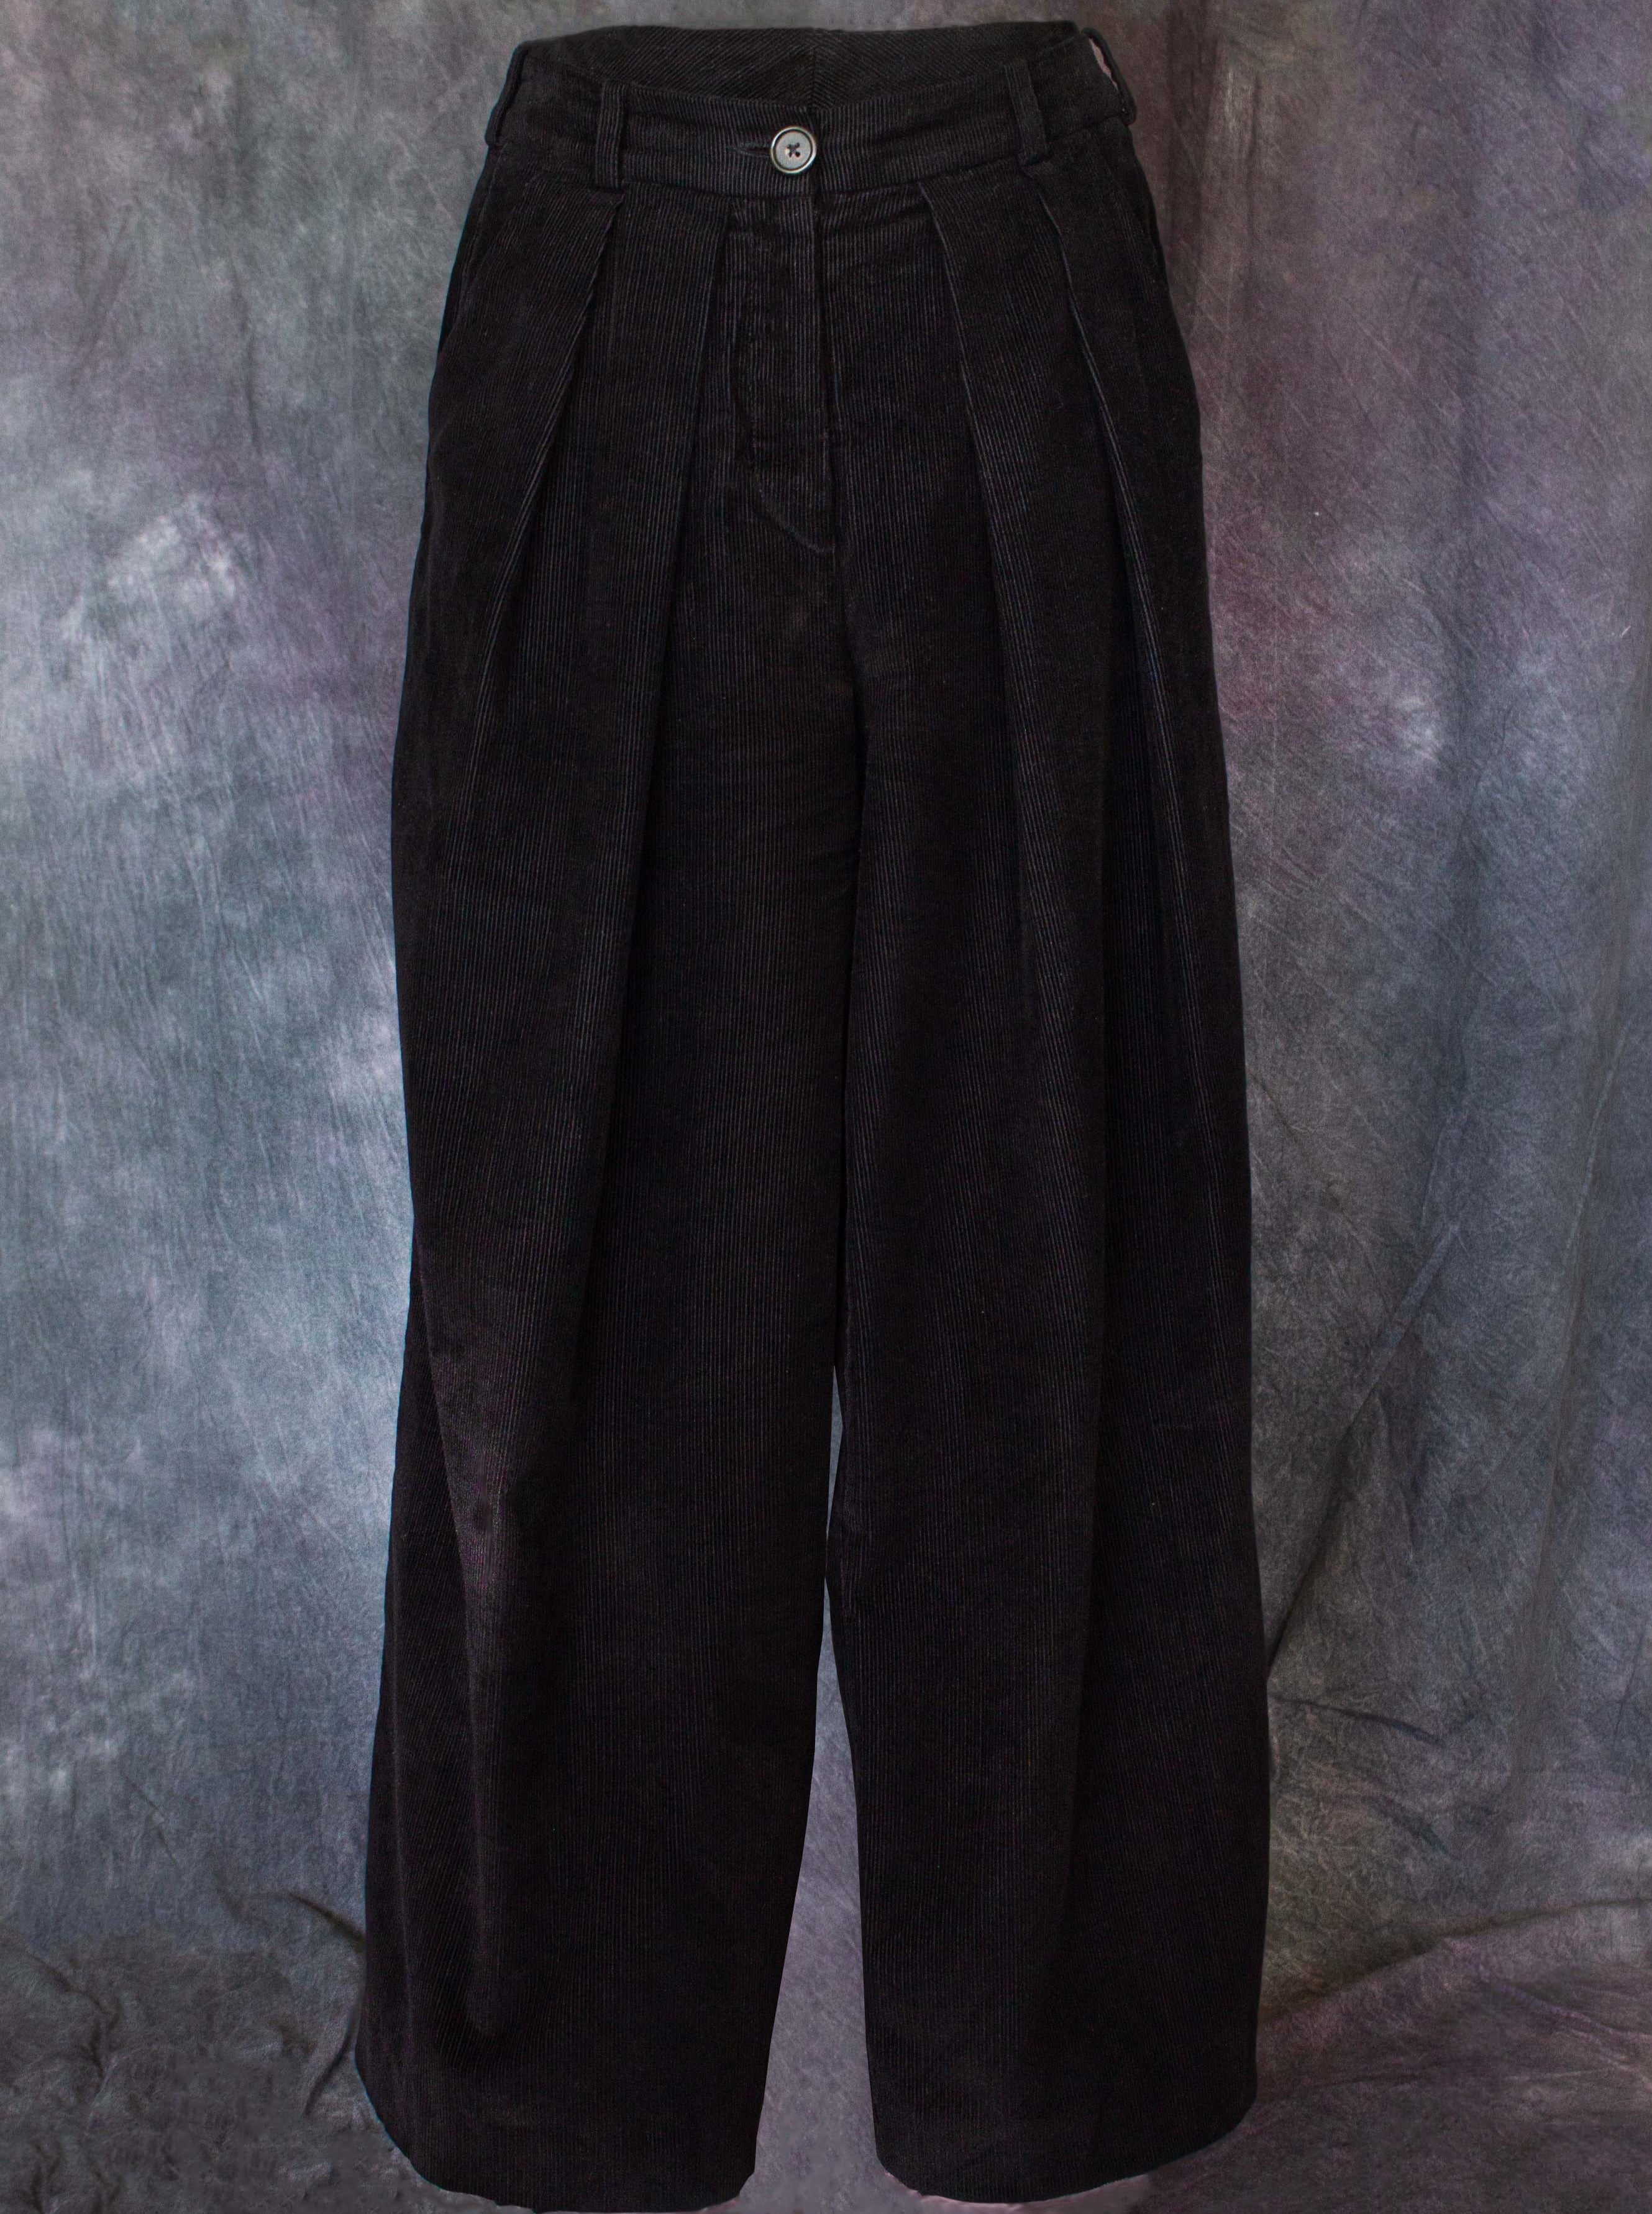 LaovanIn Women's Corduroy Cotton Pants Elastic Waist Casual Pants Comfy  Trousers Dark Khaki Large at Amazon Women's Clothing store